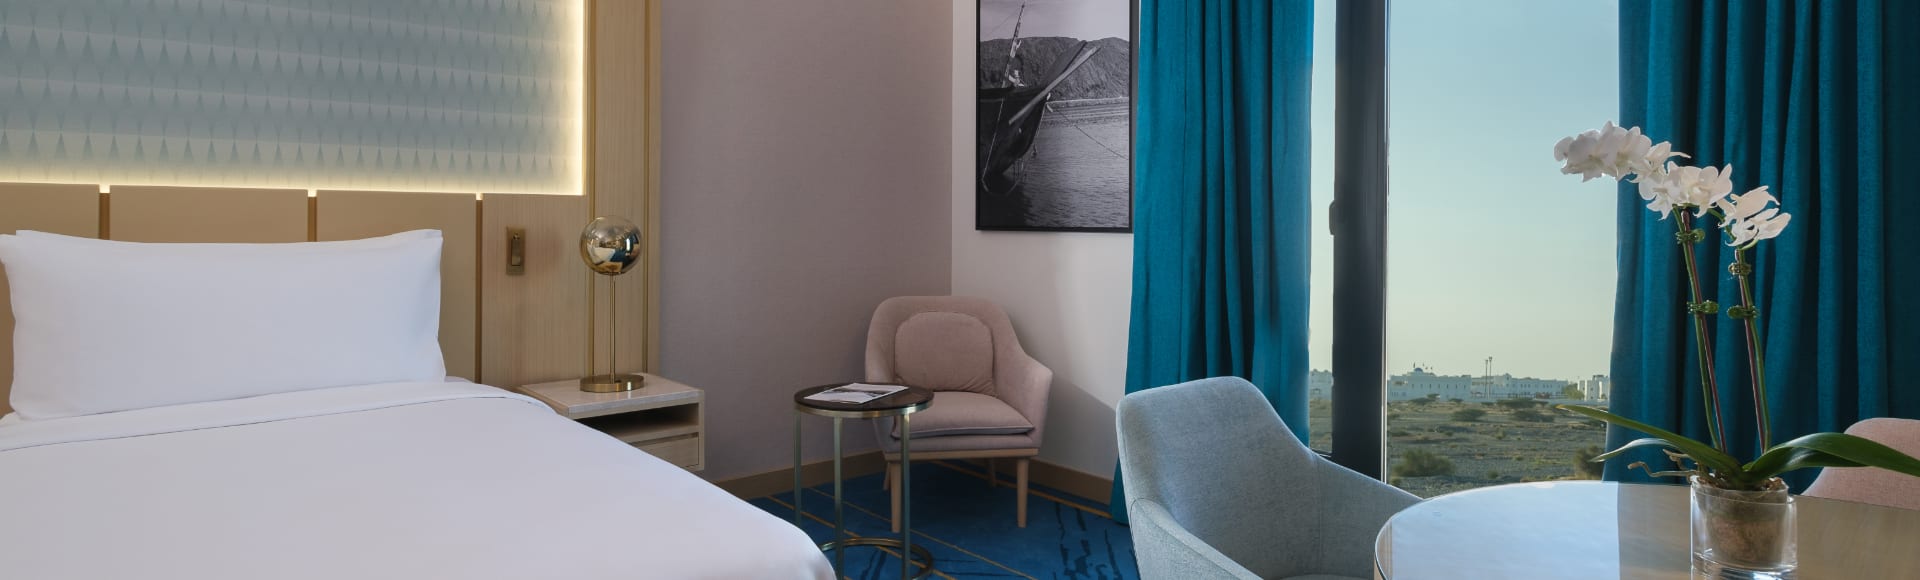 Standard Room, Stylish comfort with urban views at Avani Muscat Hotel, Al Seeb, Muscat, Oman